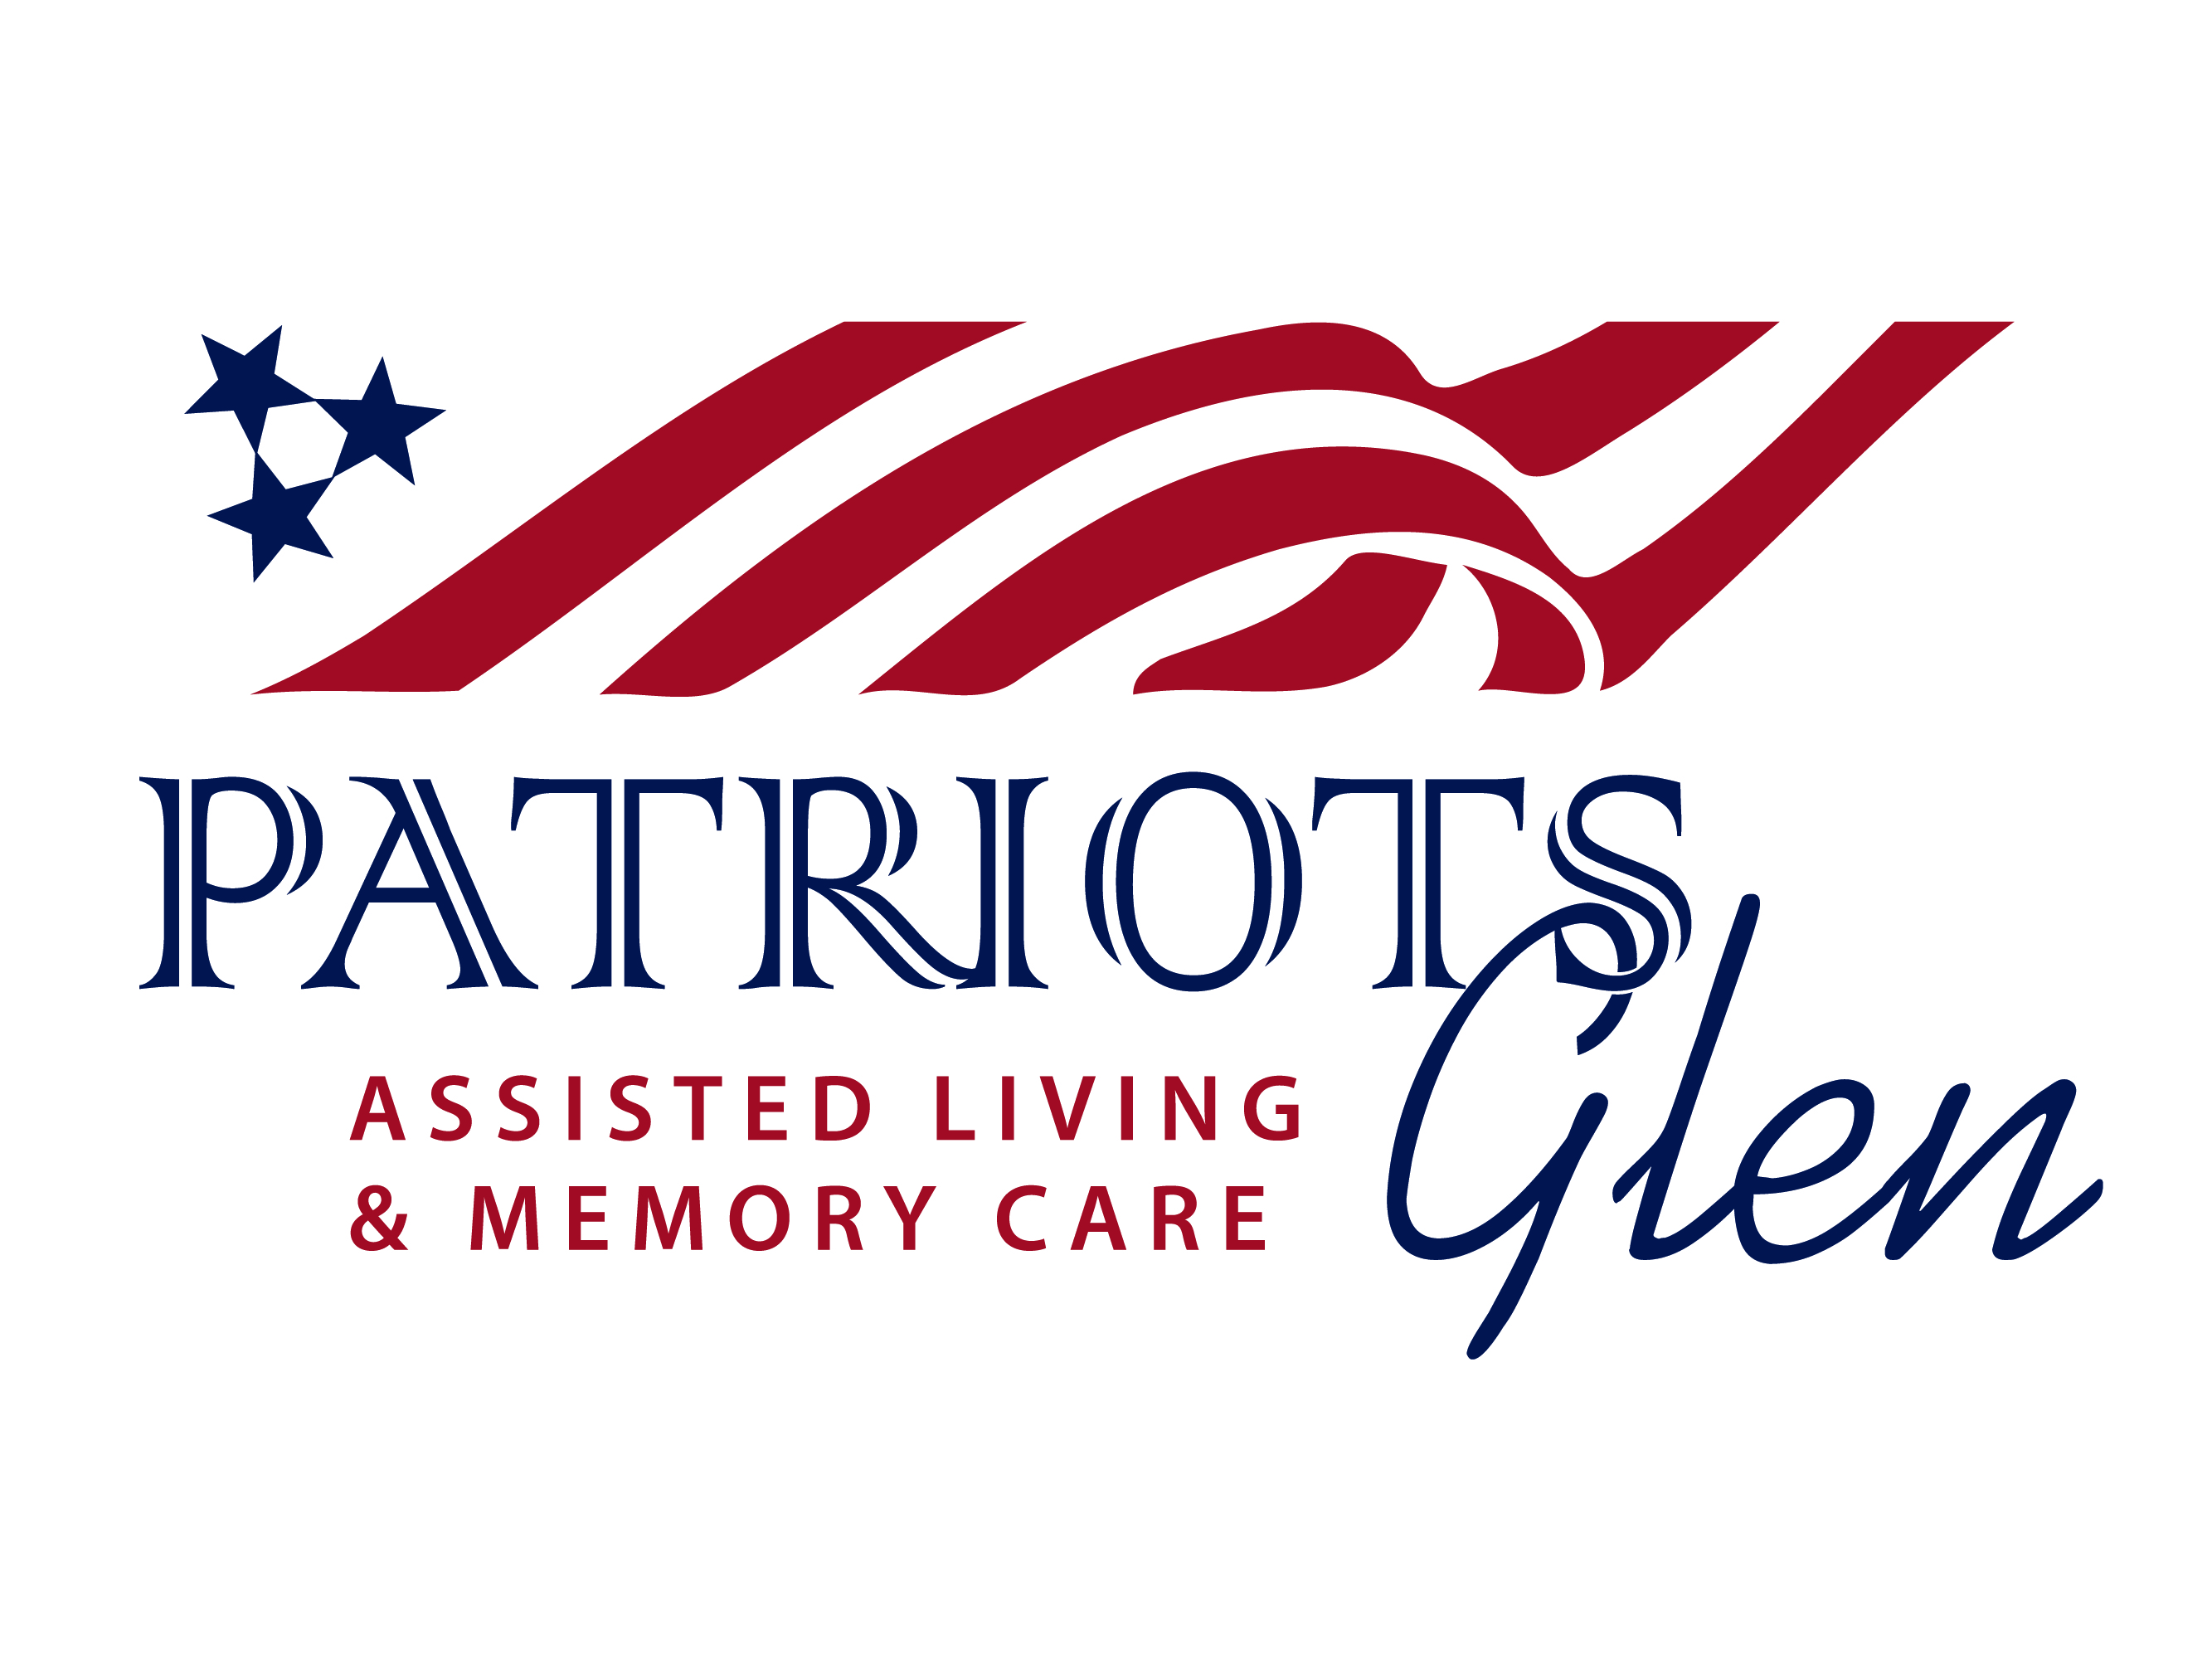 Patriots Glen – A Careage Community